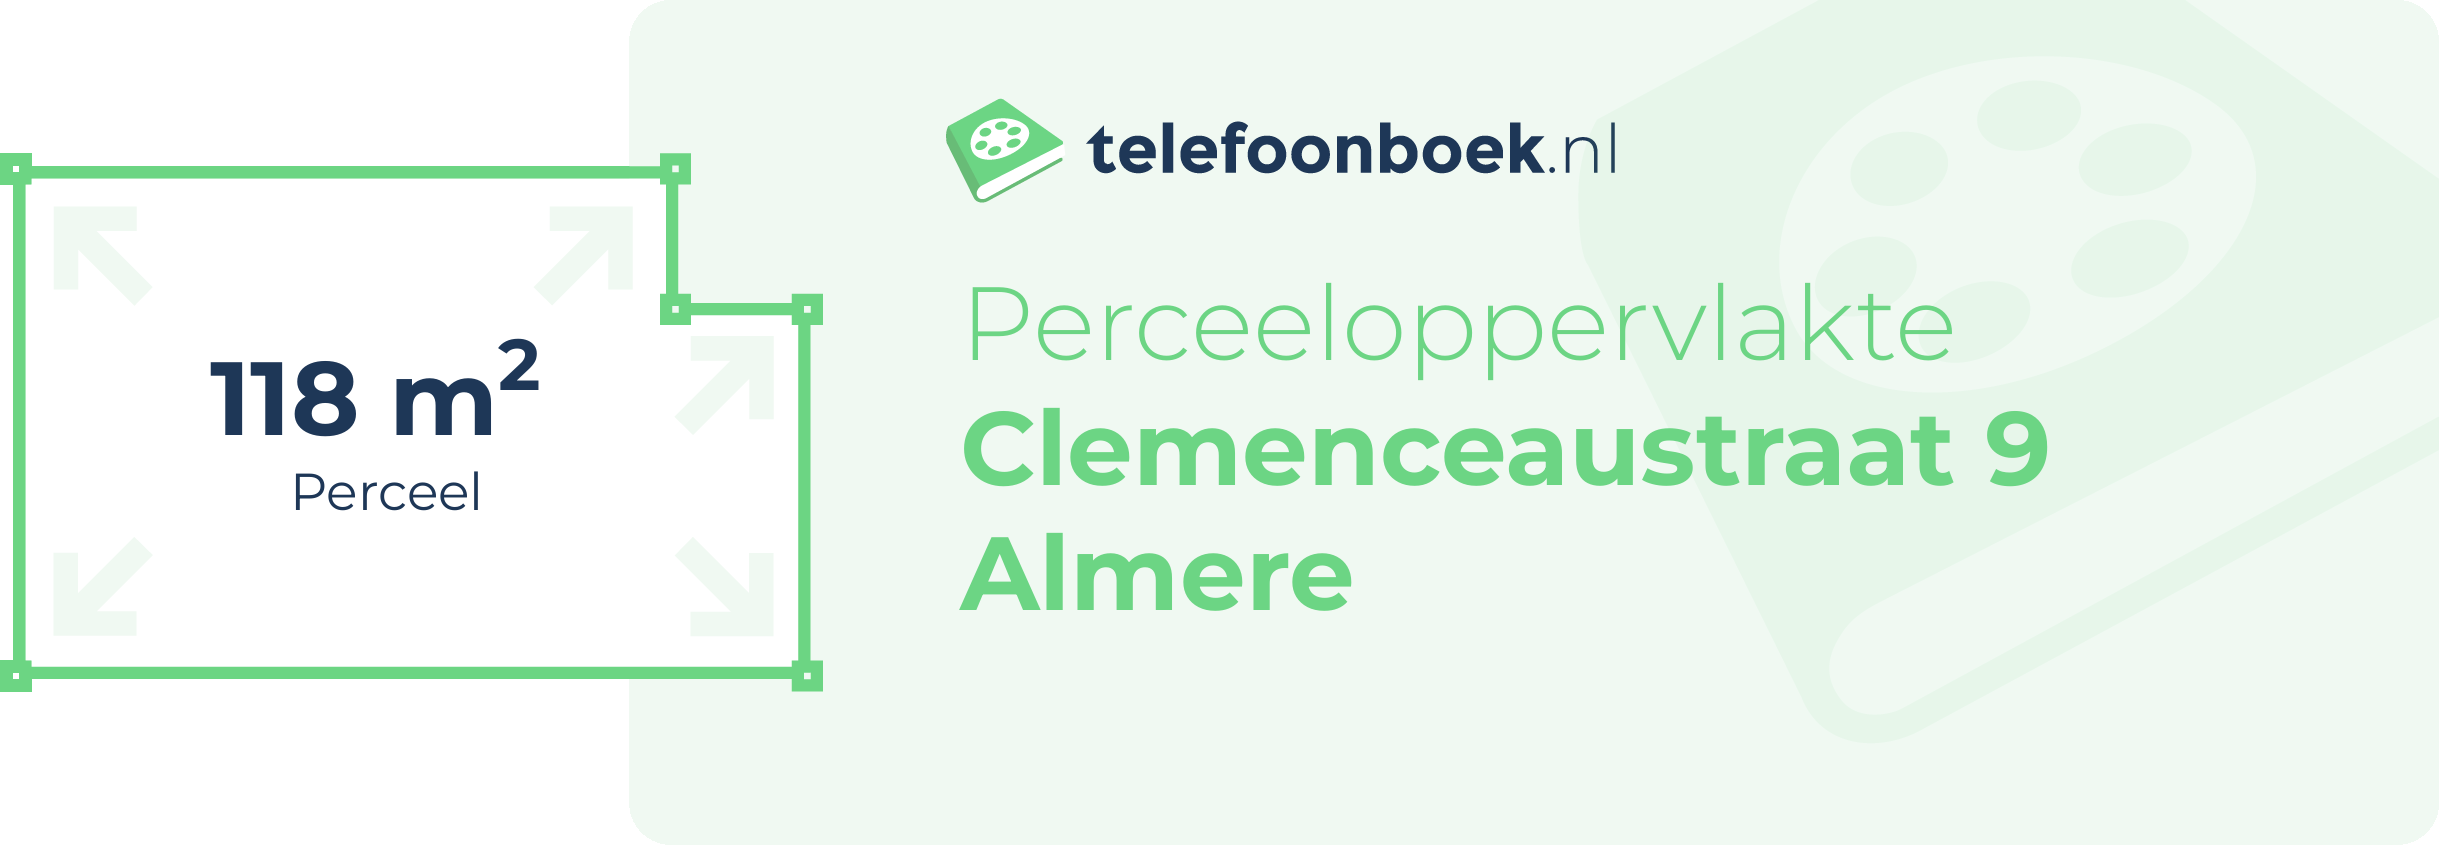 Perceeloppervlakte Clemenceaustraat 9 Almere